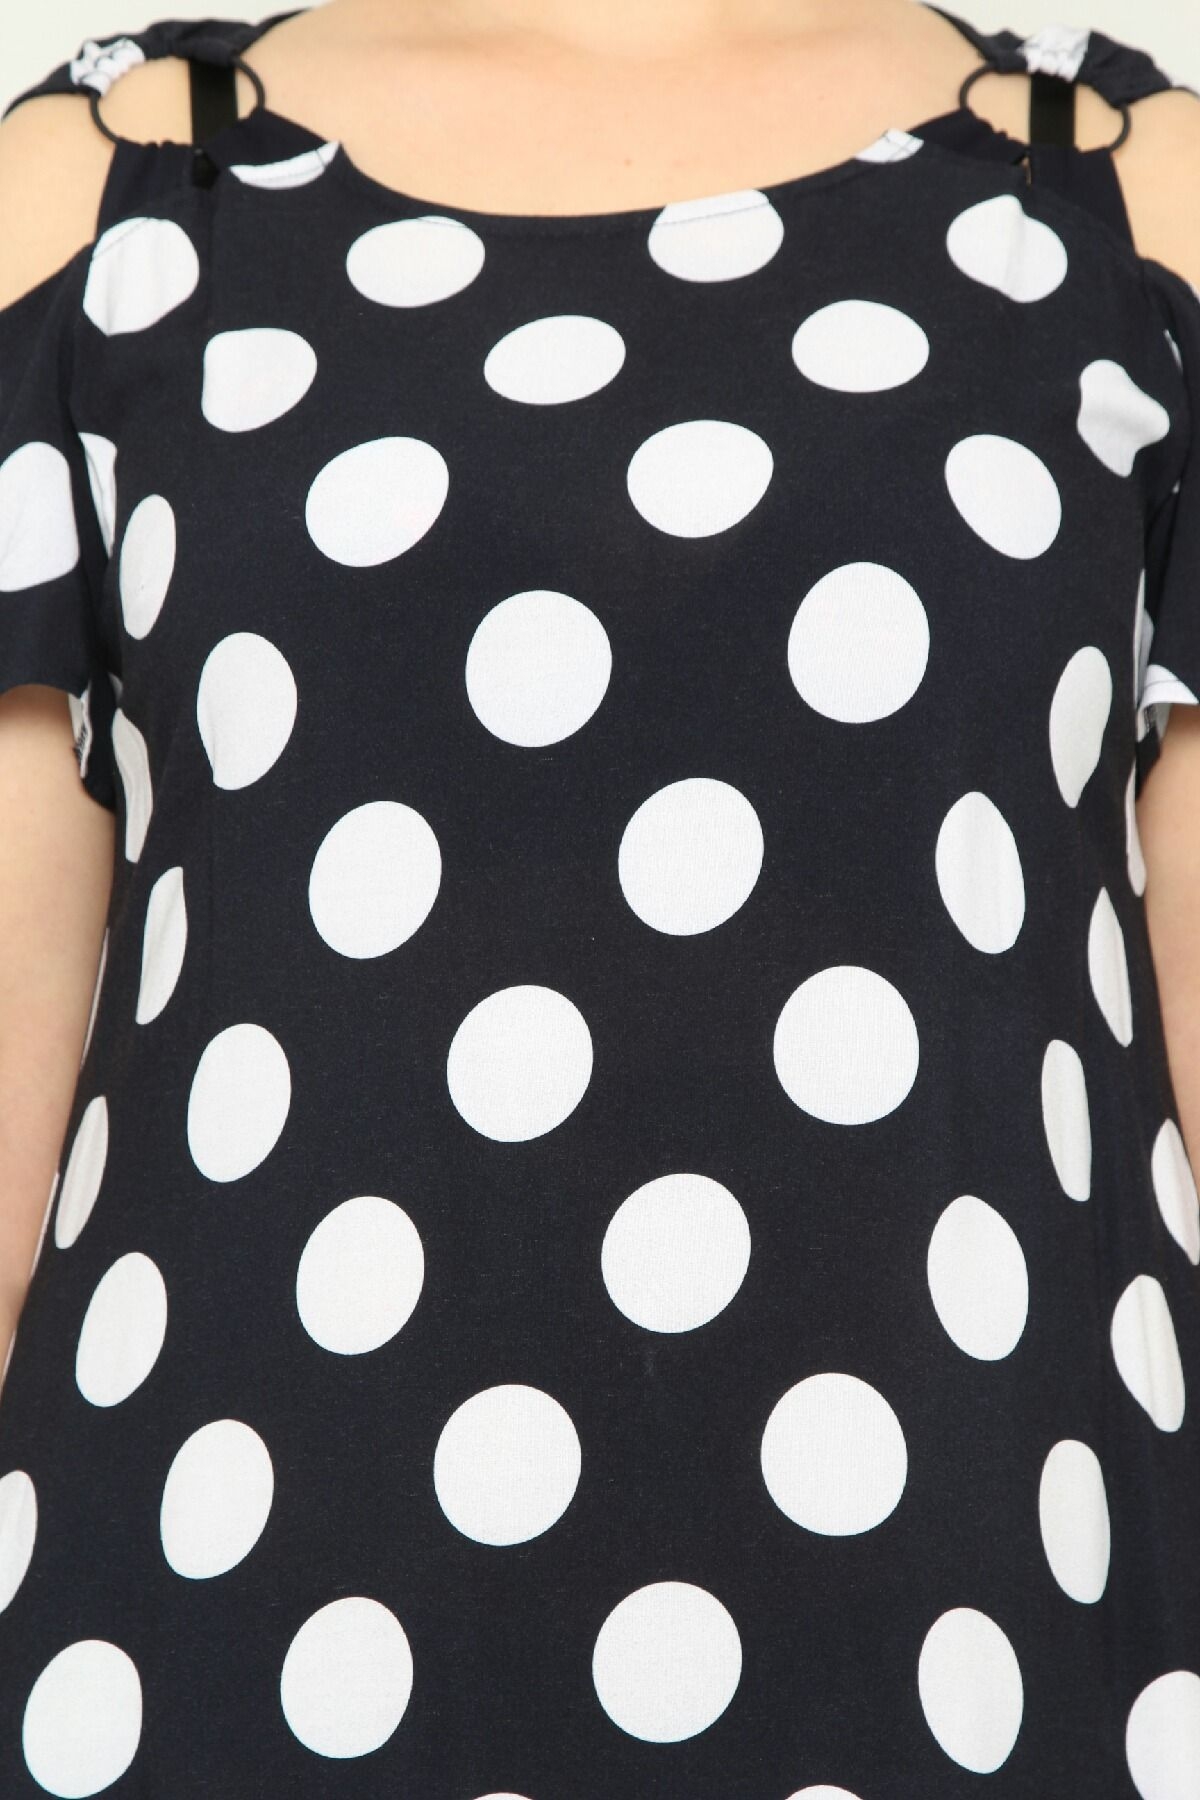 Asymmetrical long polka dot dress with short sleeves and pockets